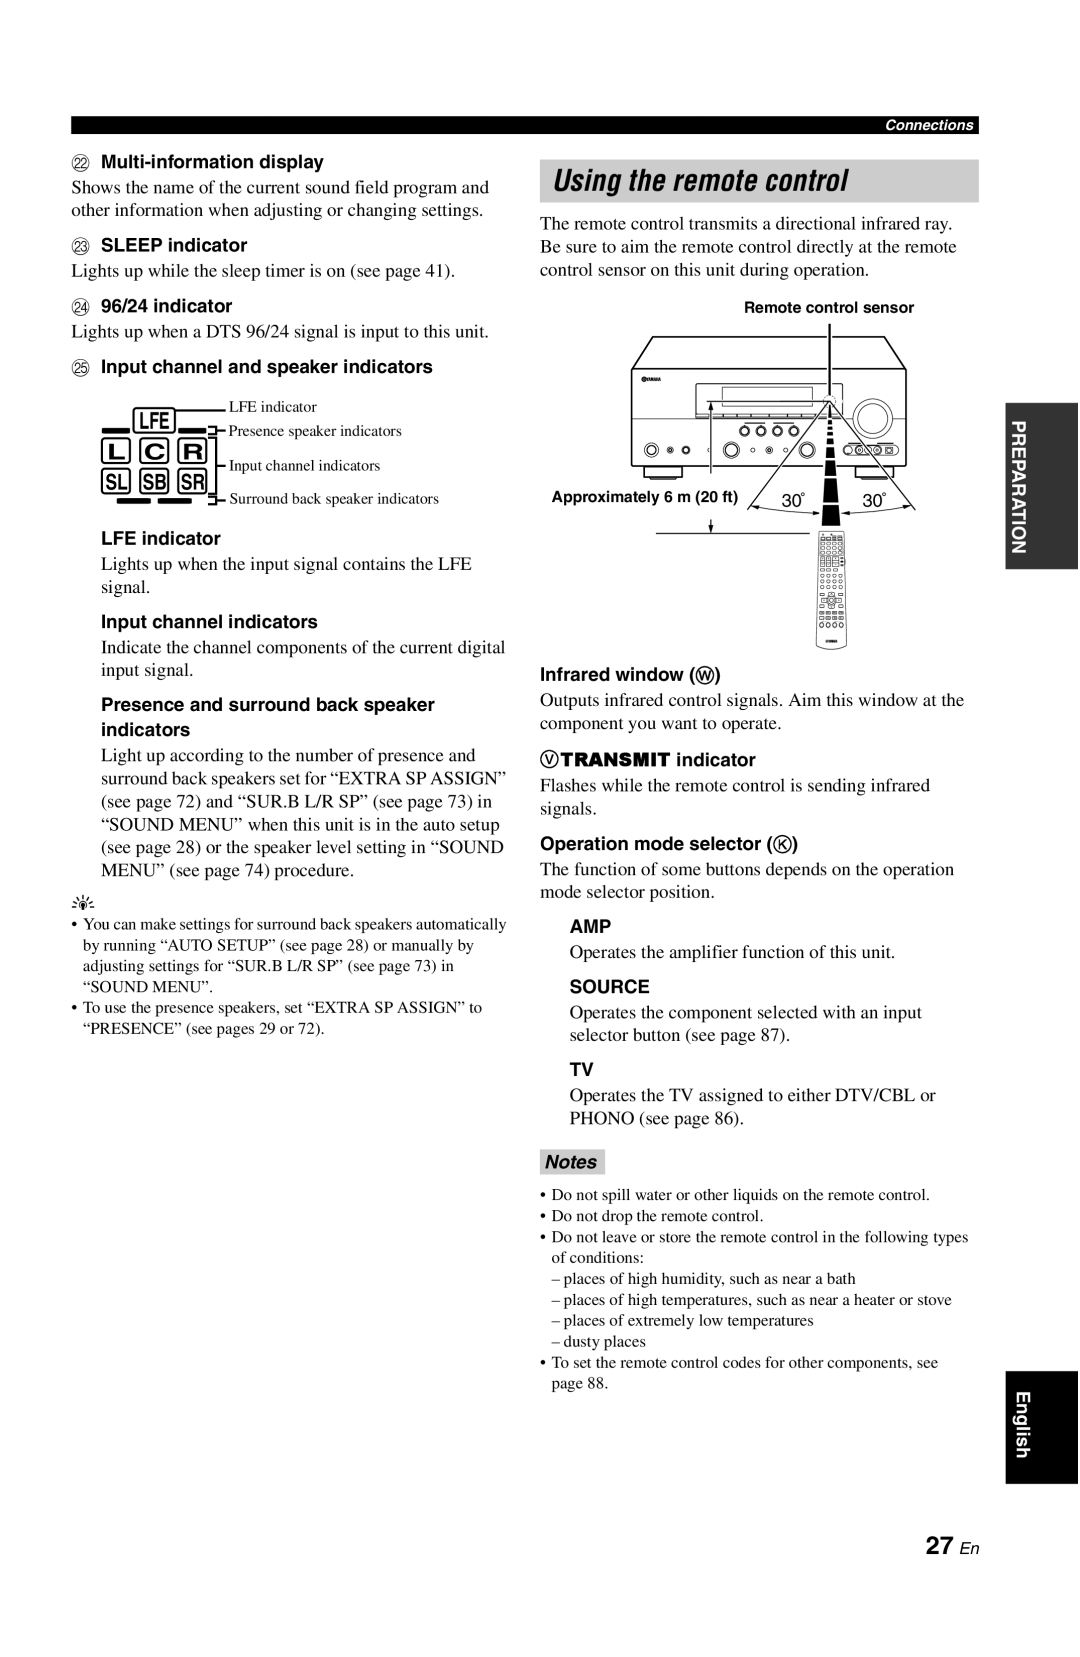 Yamaha RX-V861 owner manual Using the remote control, 27 En, L C R, Sl Sb Sr, Notes 